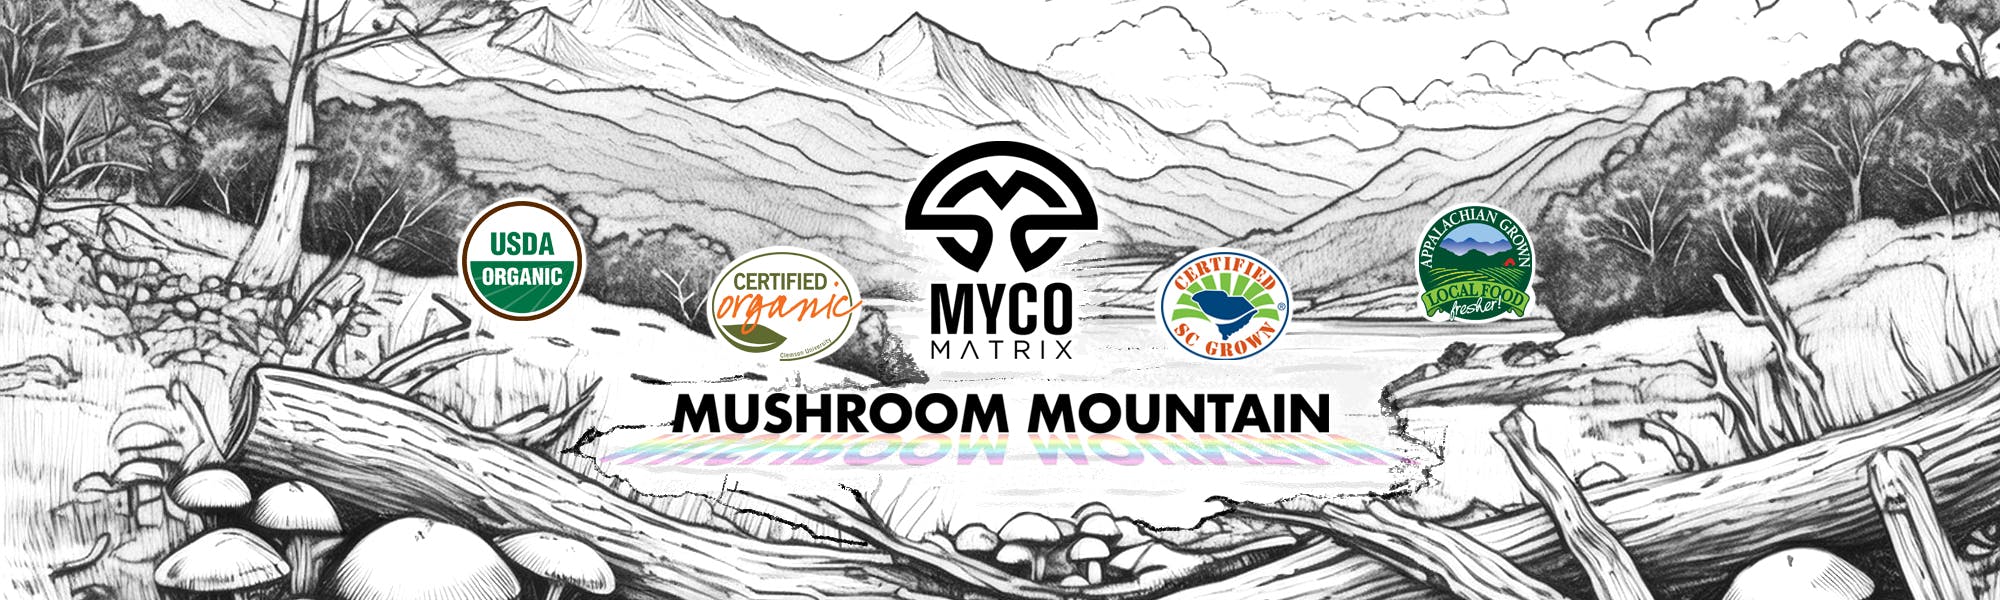 Mushroom Mountain / Mycomatrix's banner